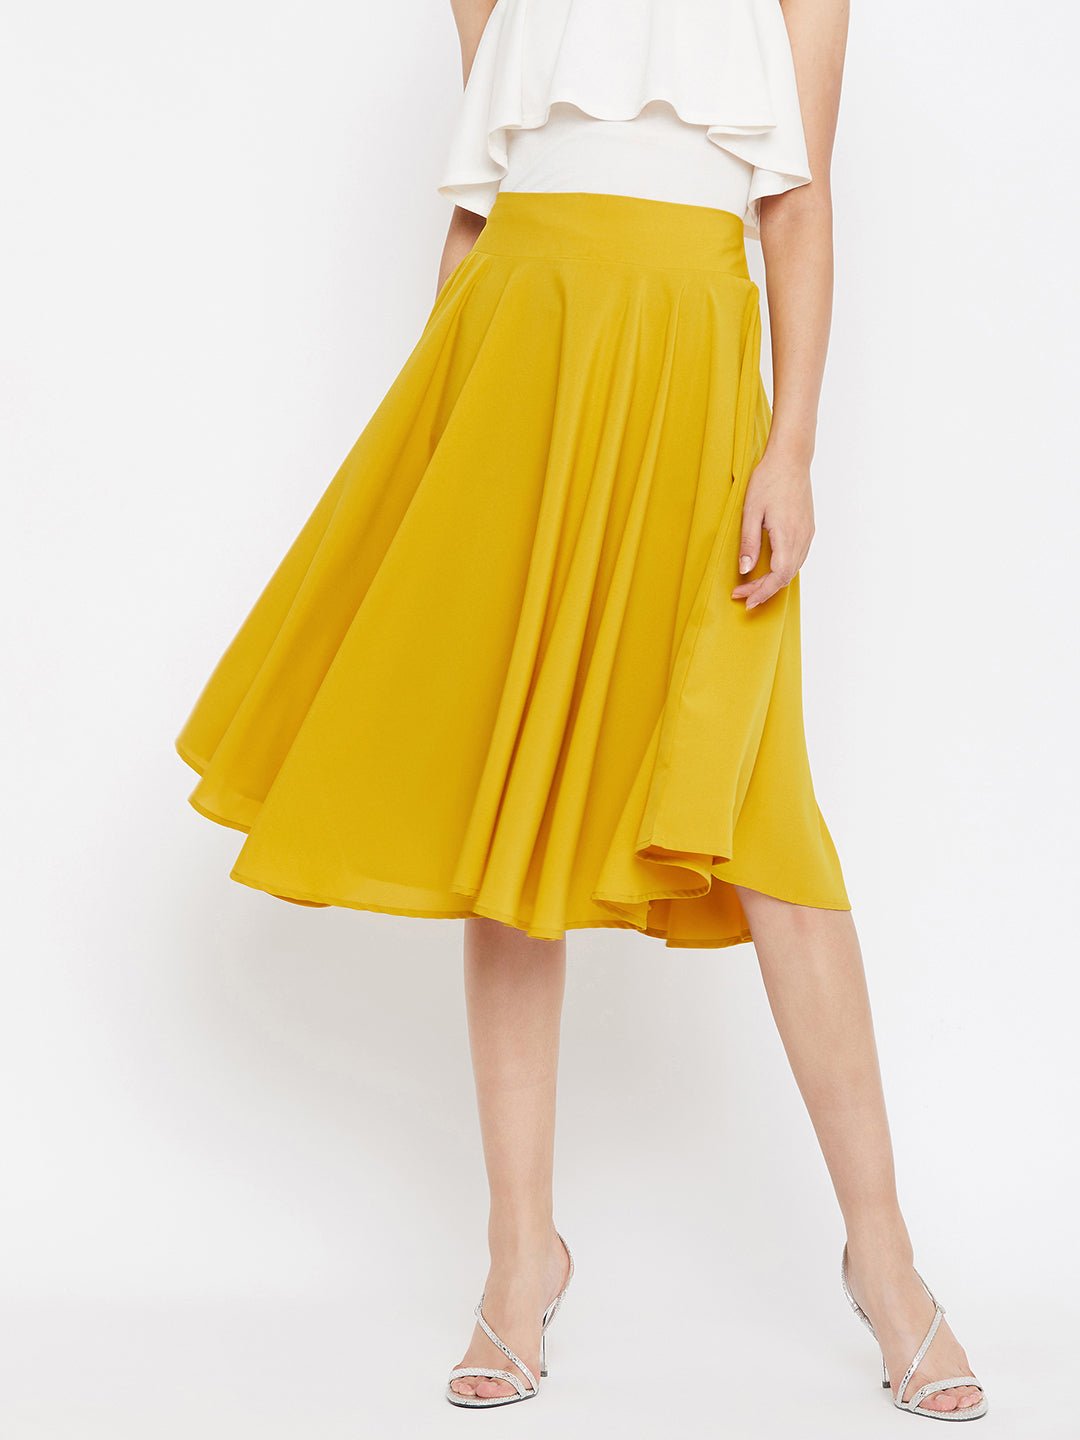 Folk Republic Women Solid Yellow High-Rise Flared Midi Skirt - #folk republic#